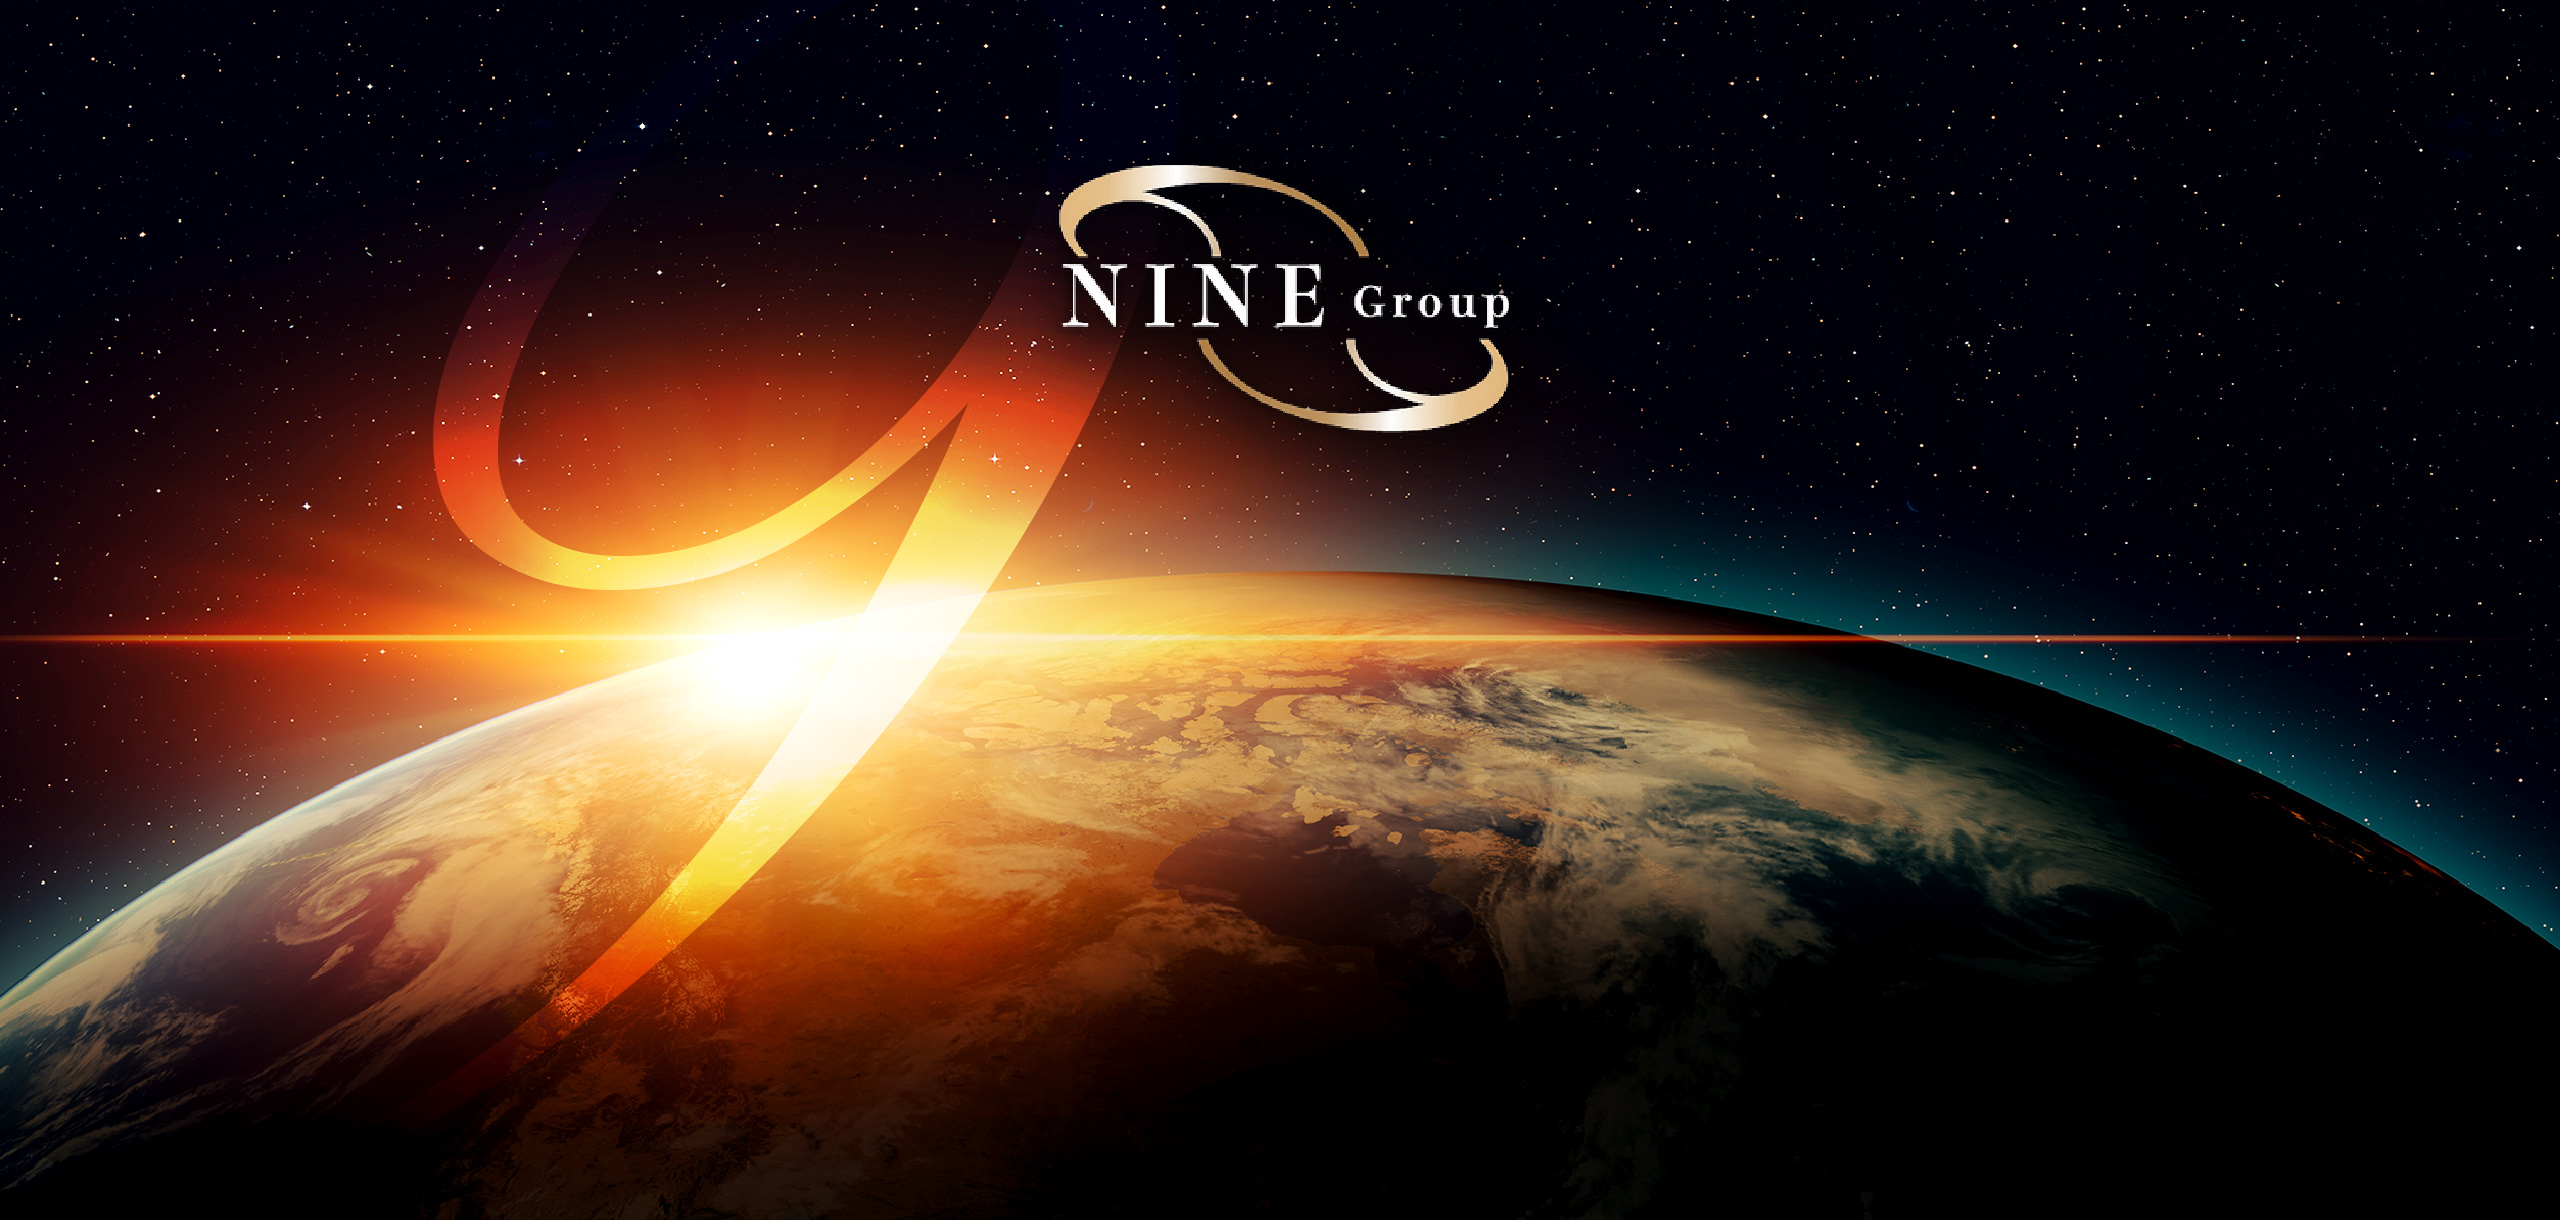 NINE Group